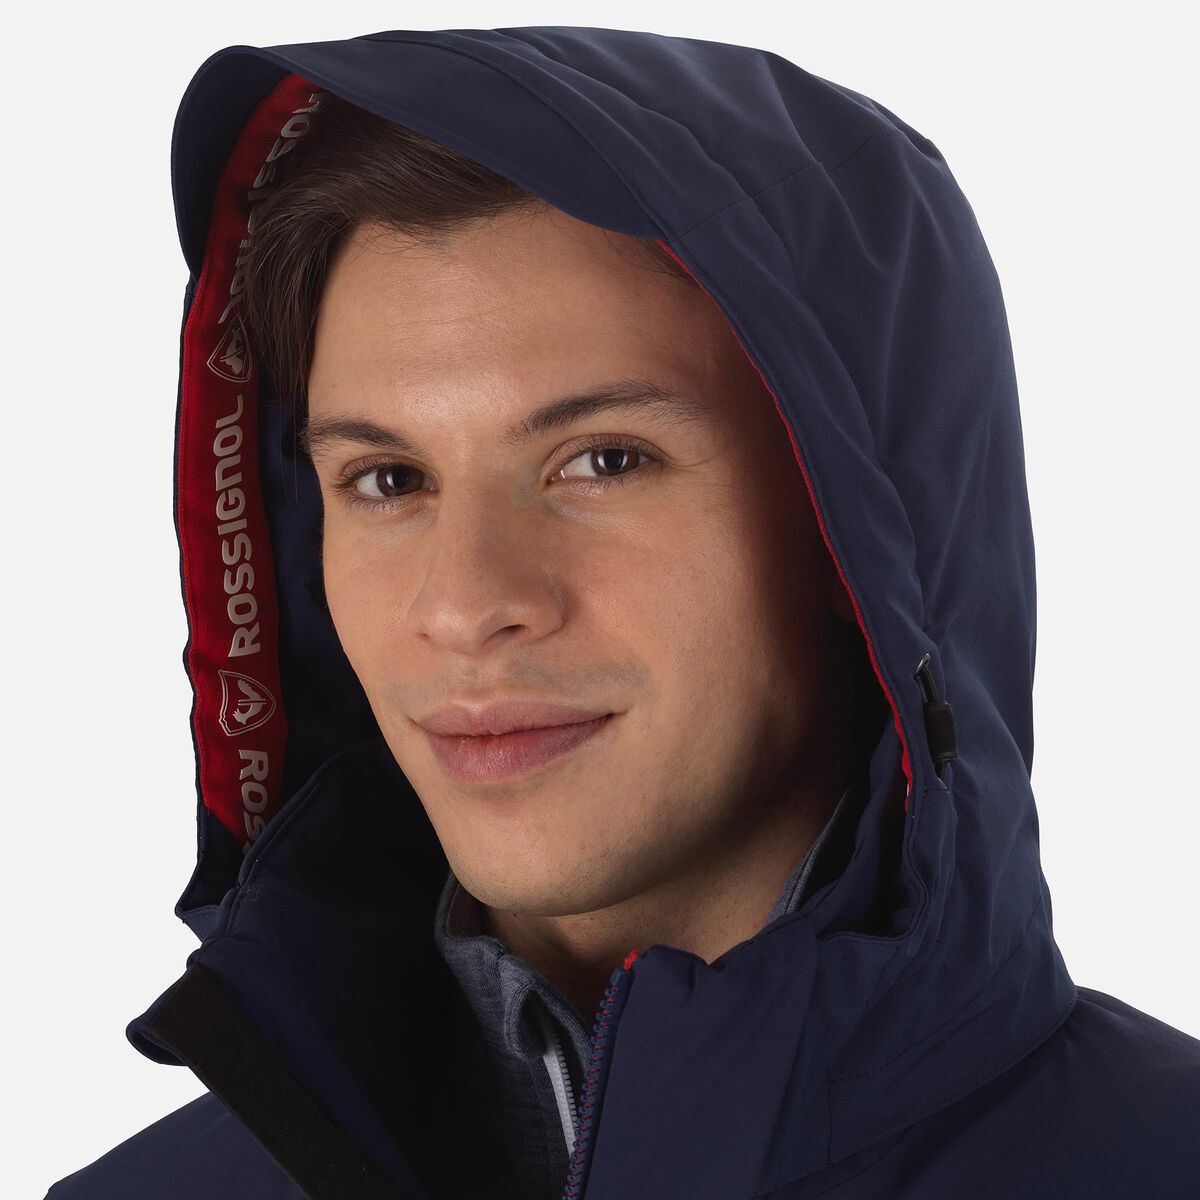 Men's React Merino Ski Jacket